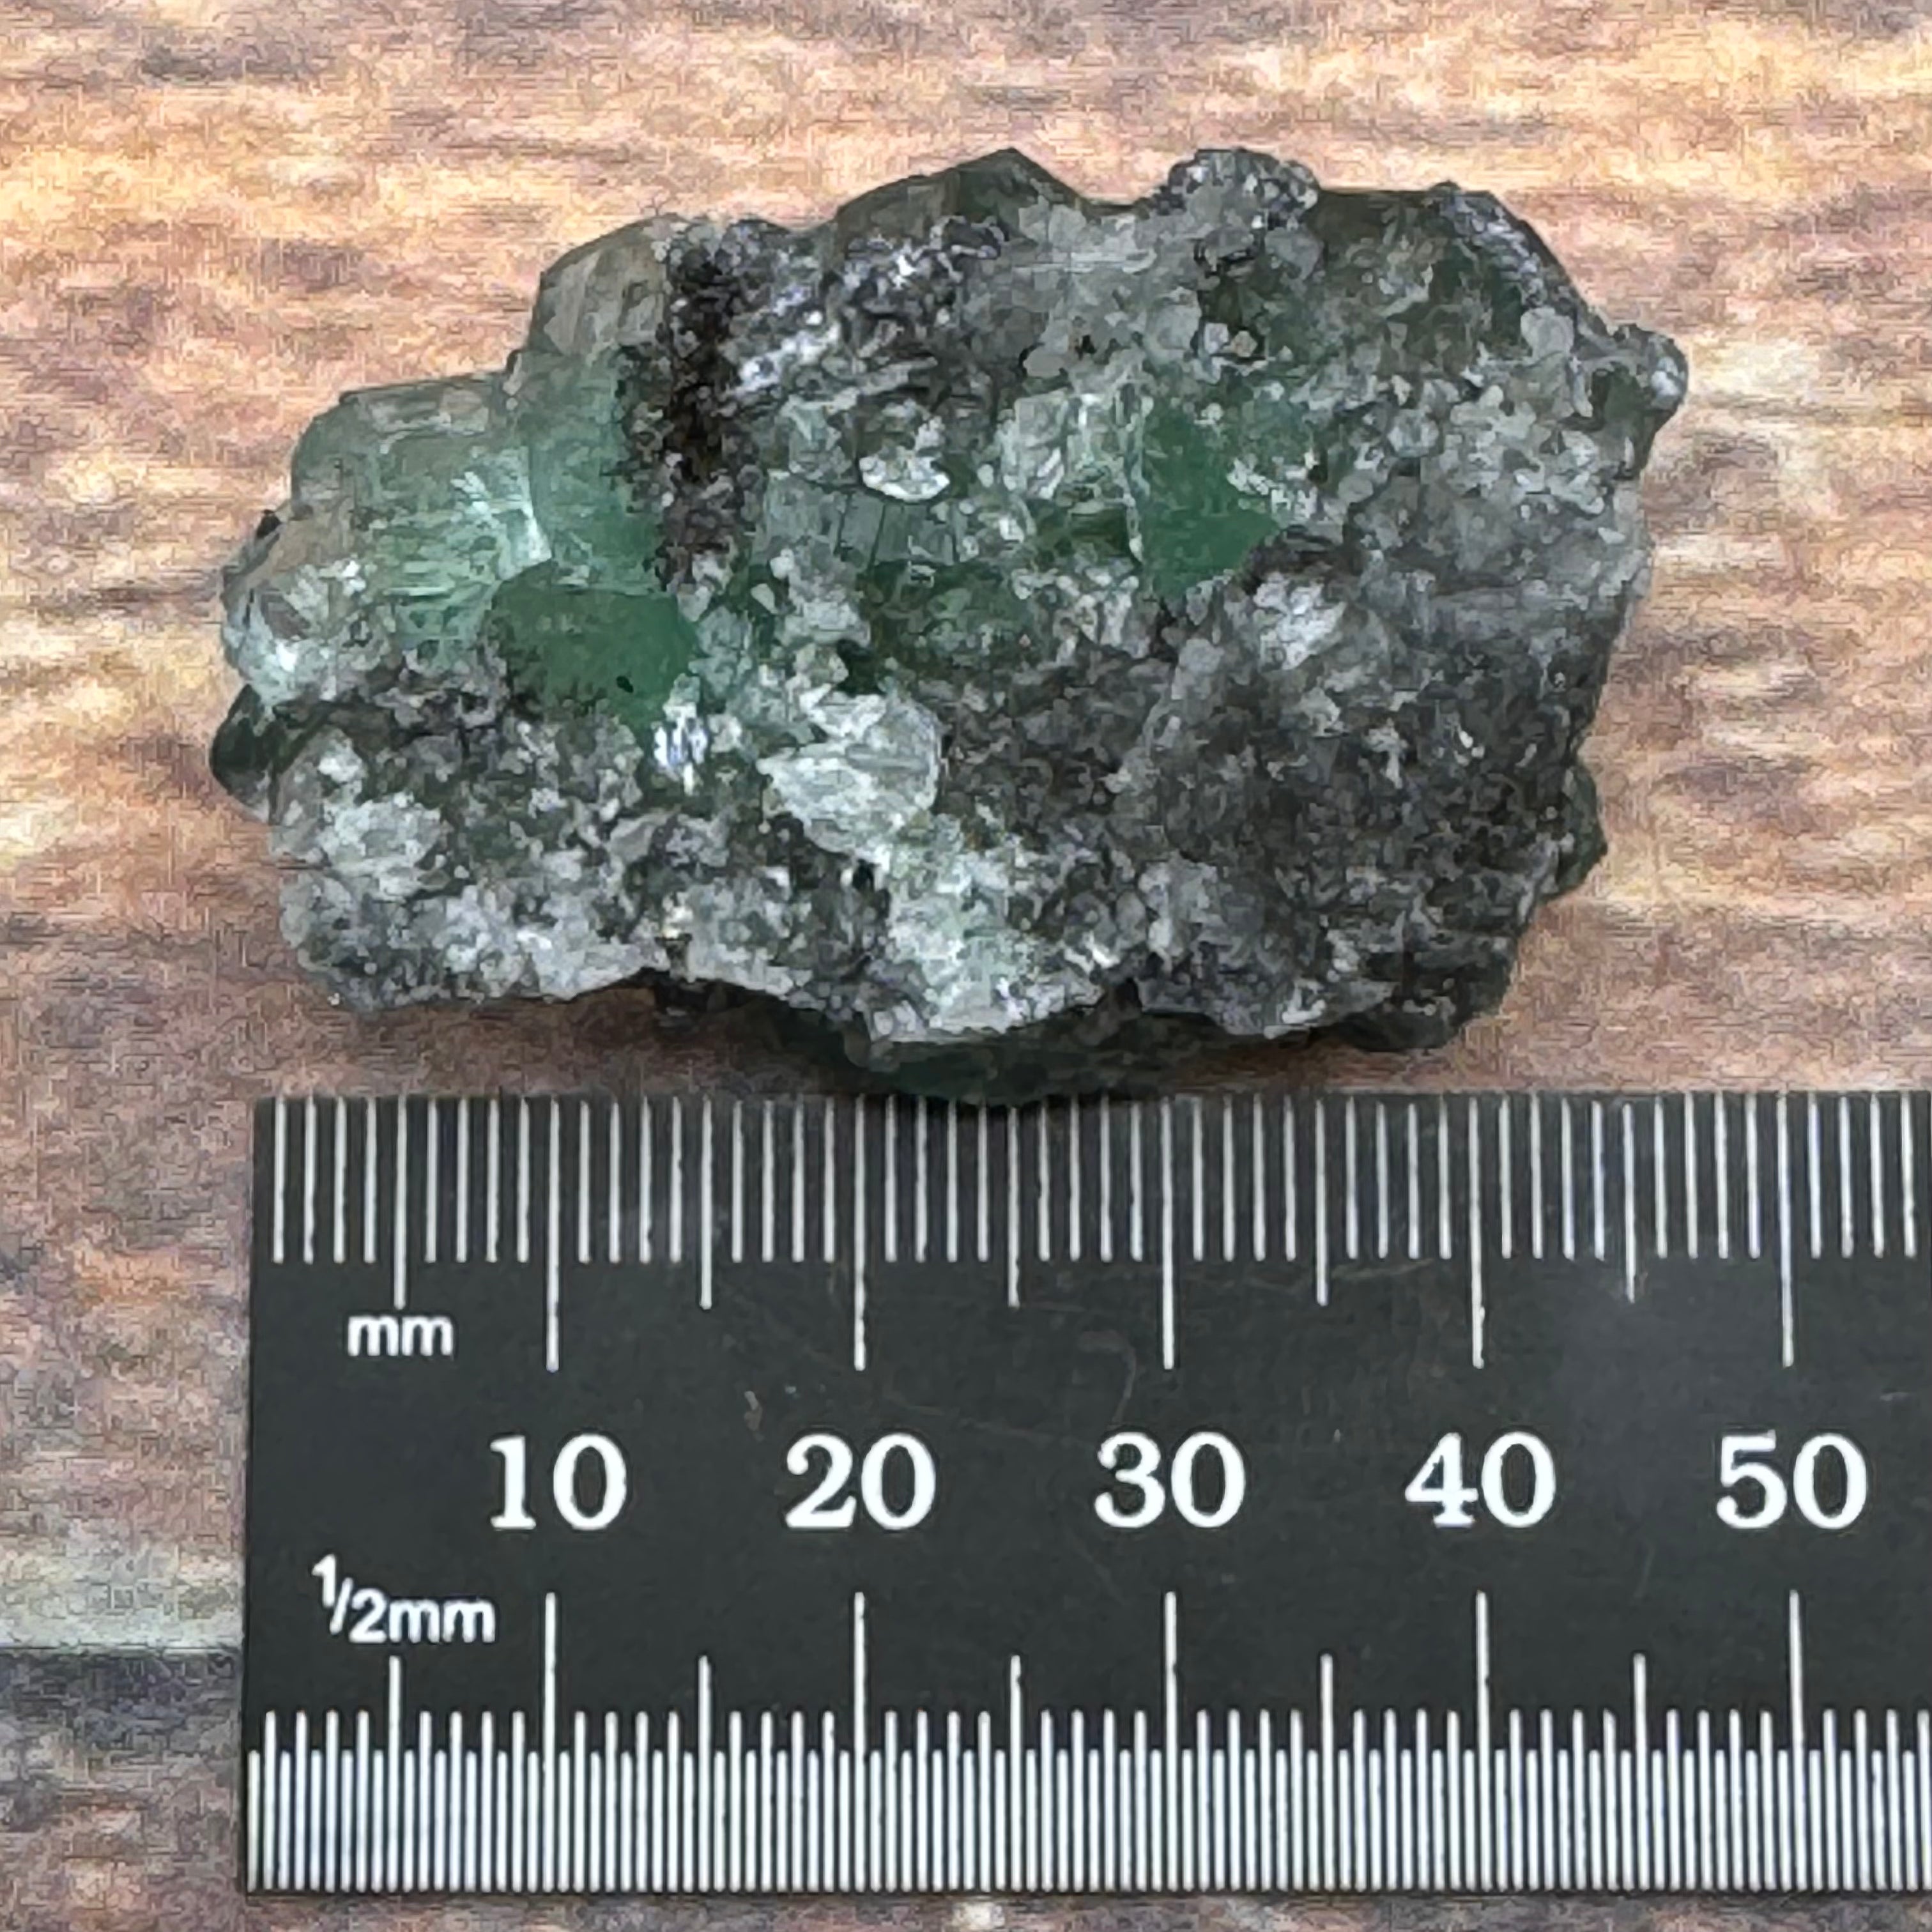 Peruvian Supernatural Green Fluorite - 062